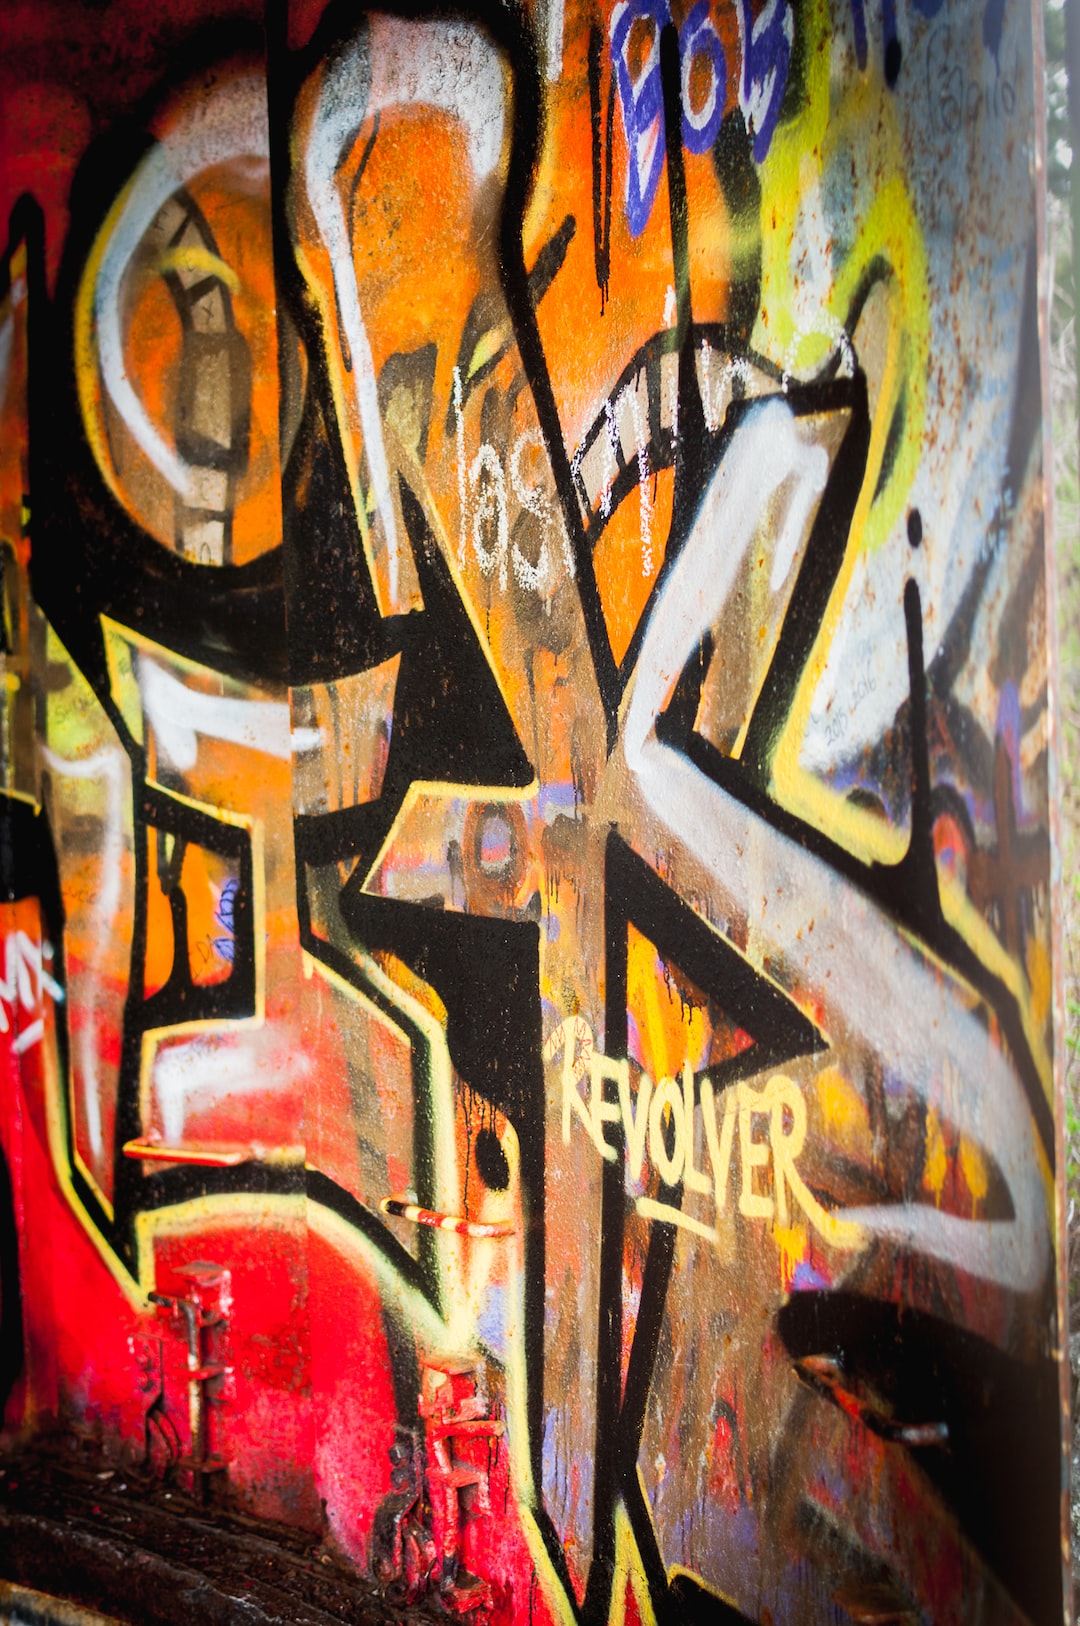 Revolver graffiti in a lighthouse